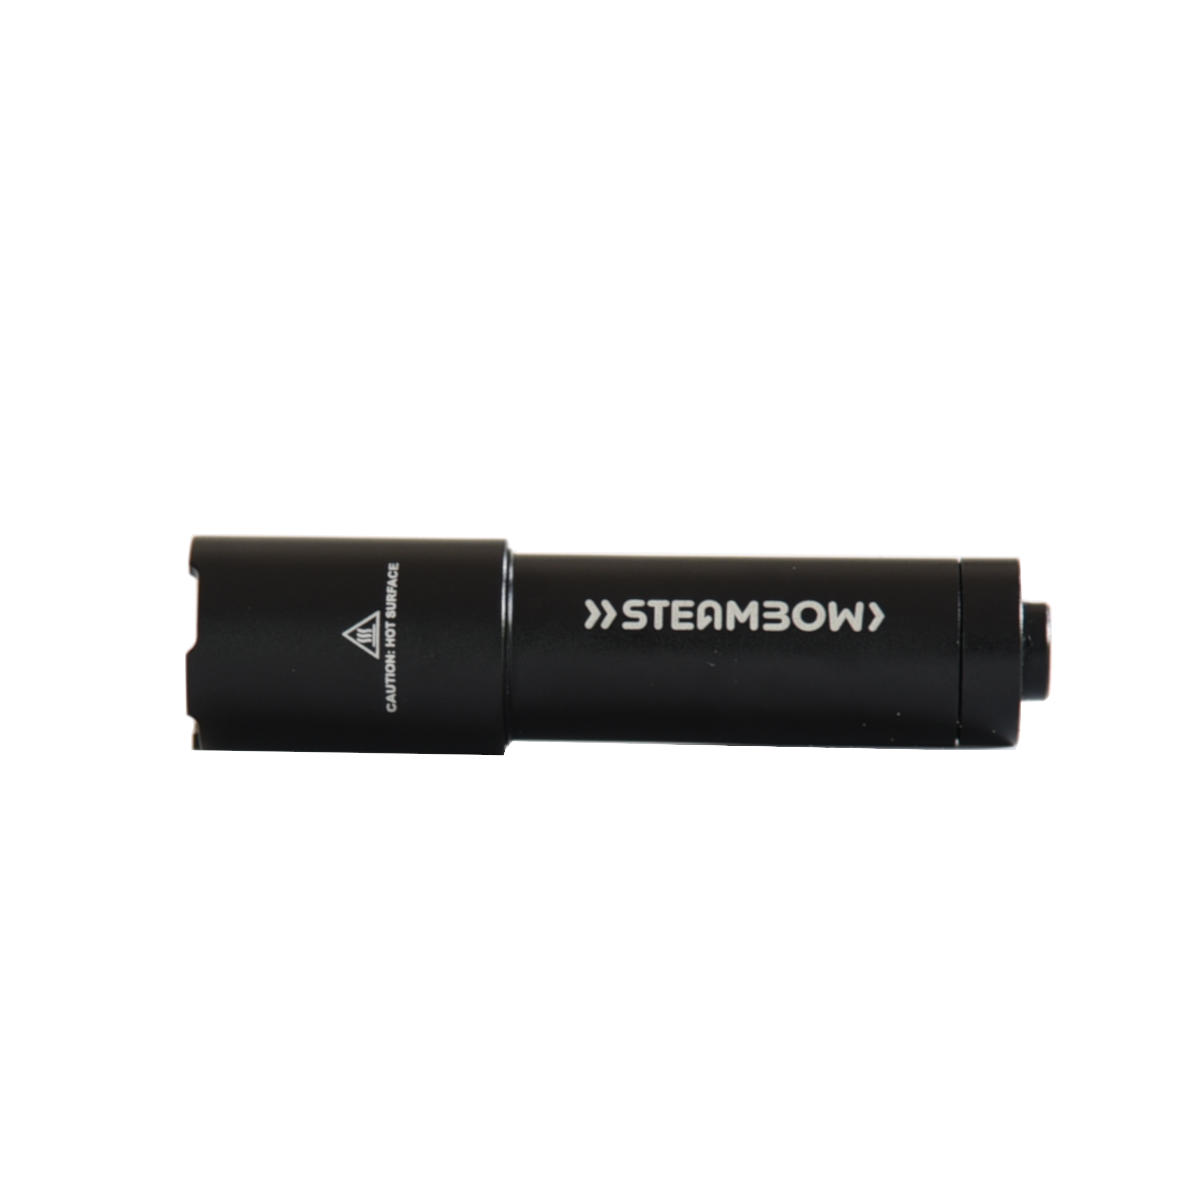 Steambow flashlight